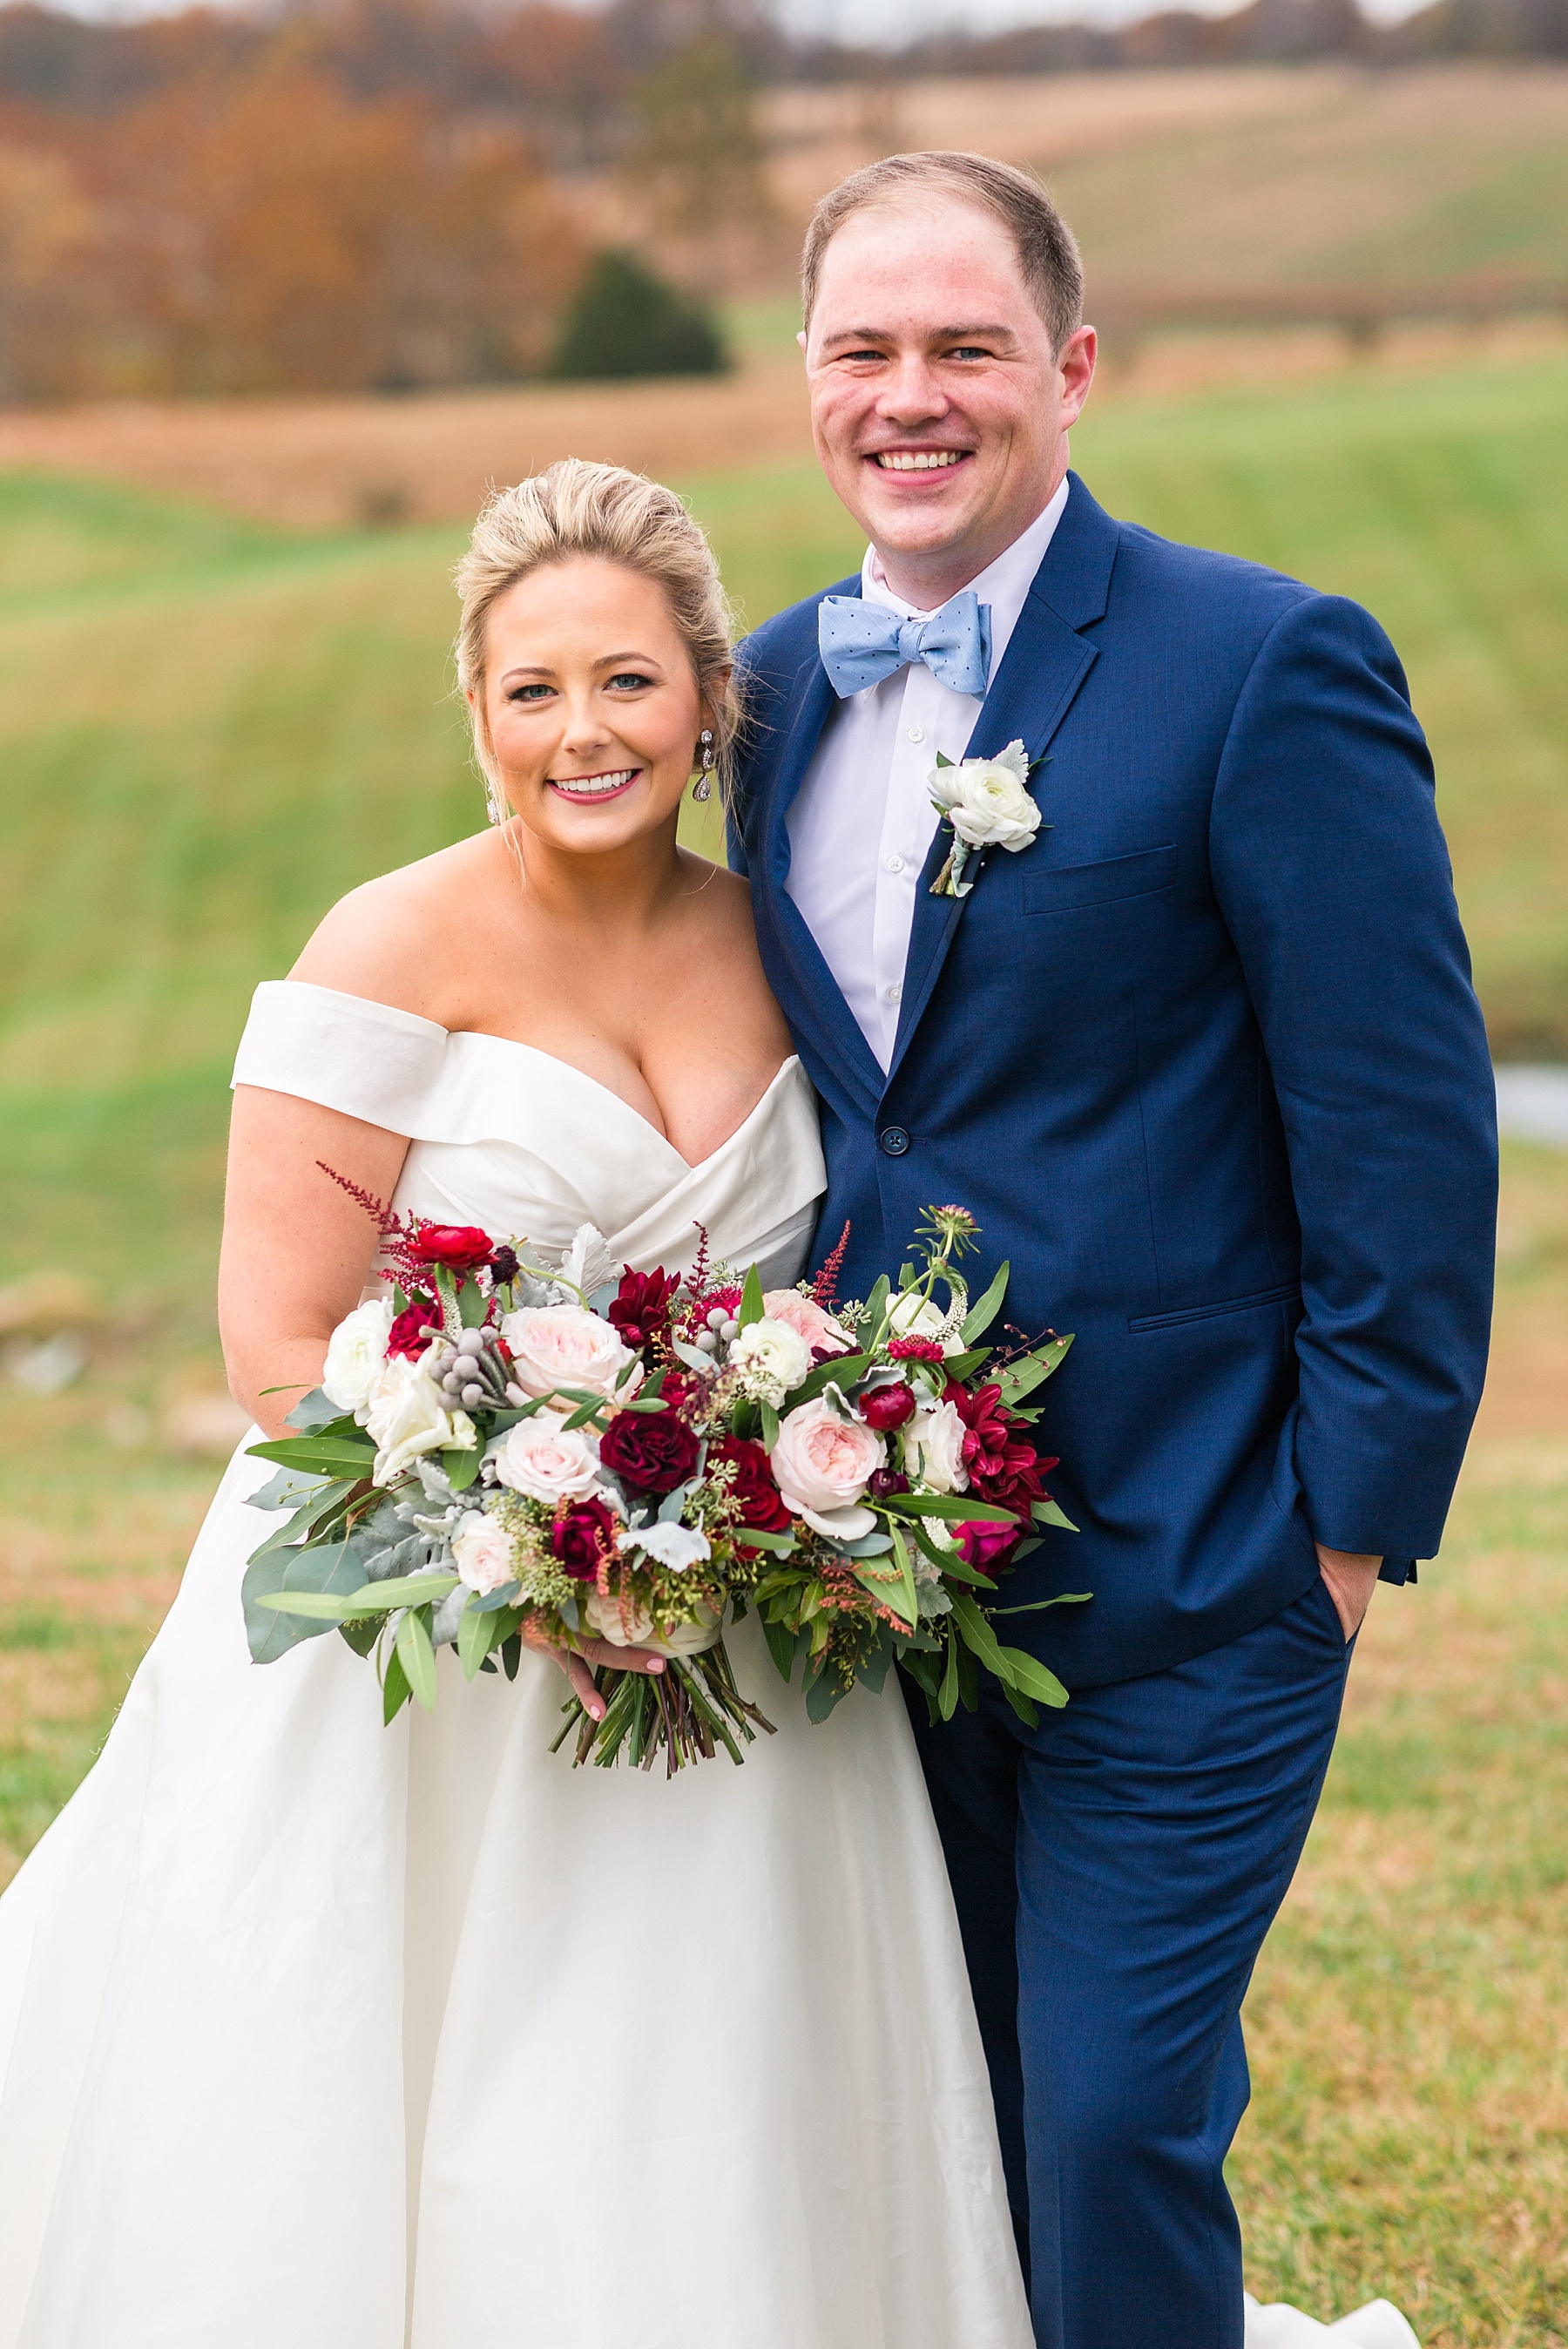 Virginia wedding photographer  Alexandra Mandato Photography captures happy couple on Stone Tower Winery wedding day